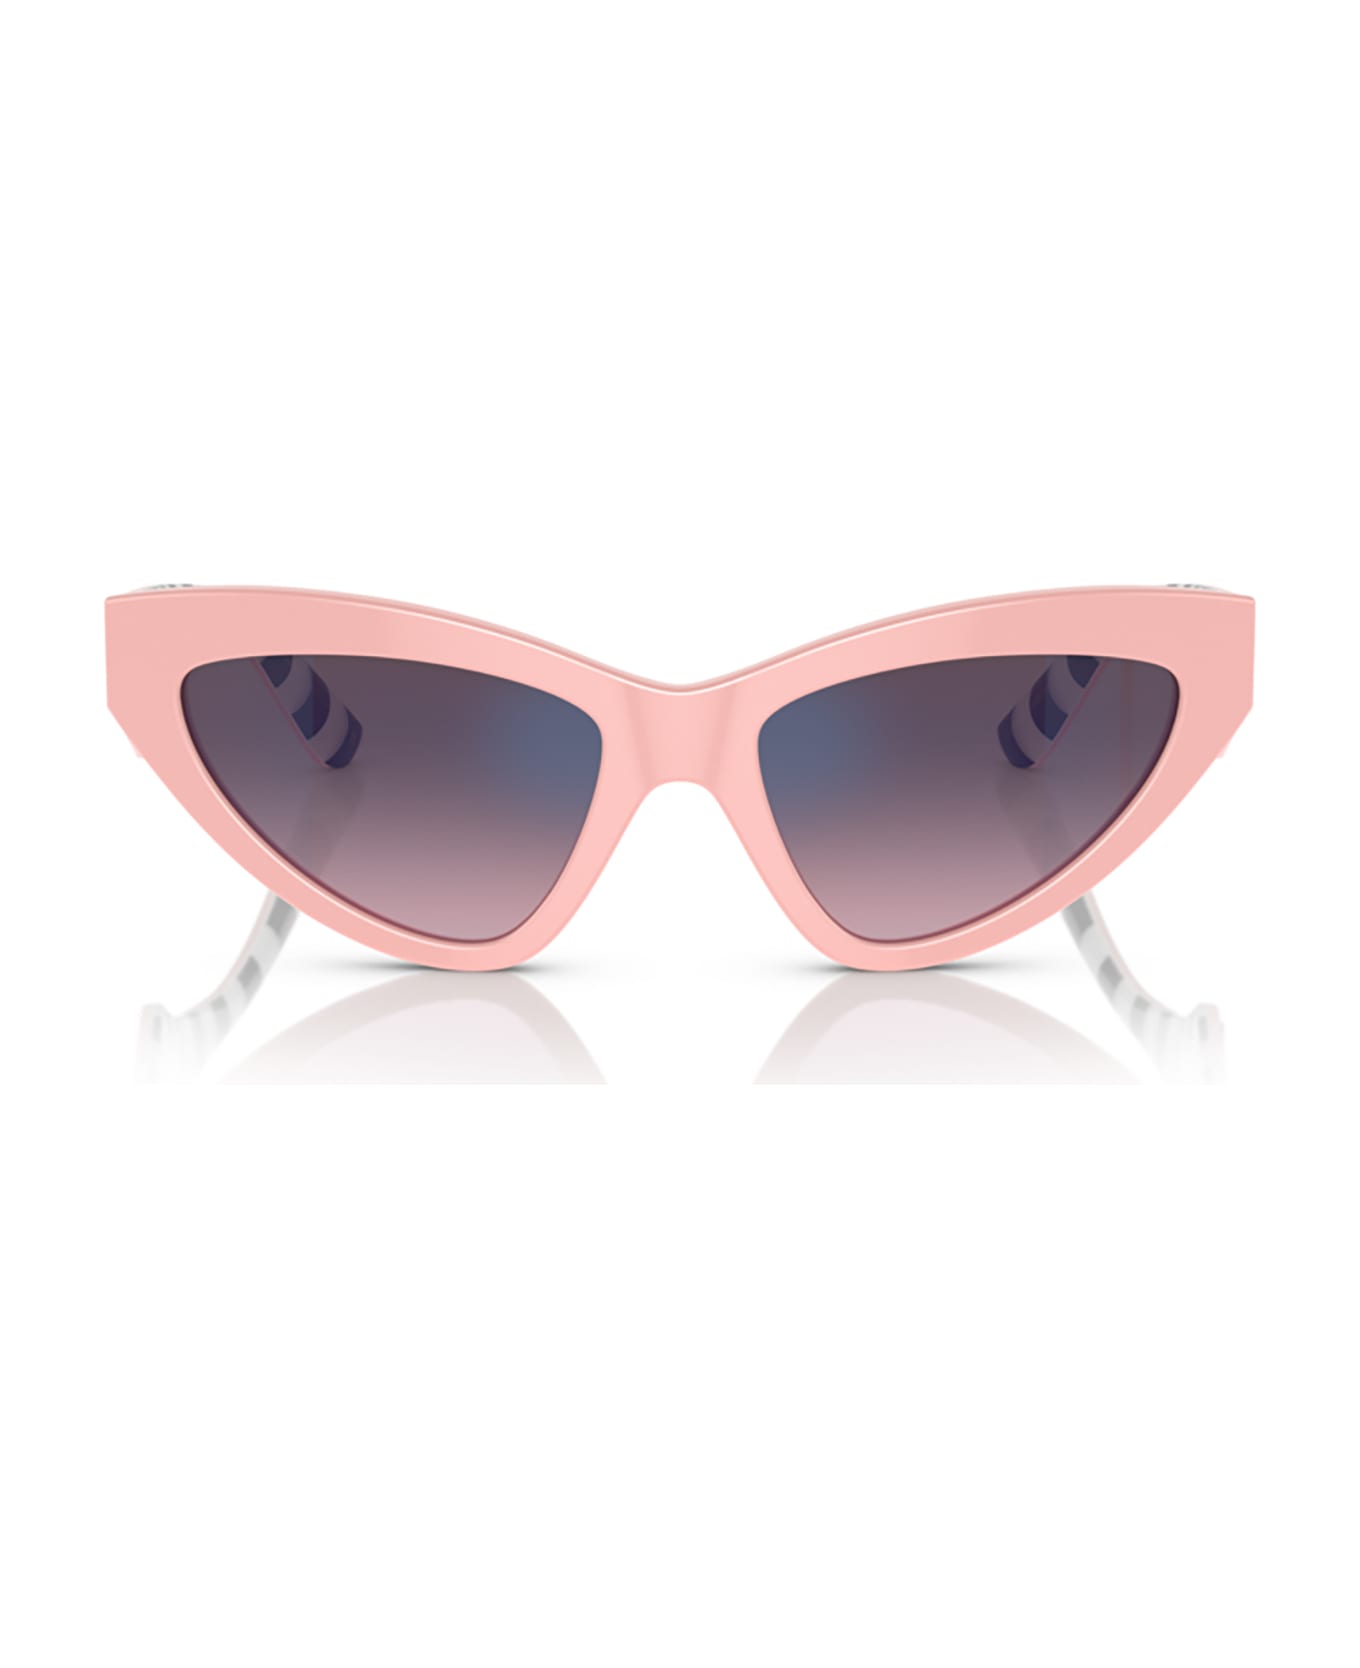 Dolce & Gabbana Eyewear Dg4439 Pink Sunglasses - Pink